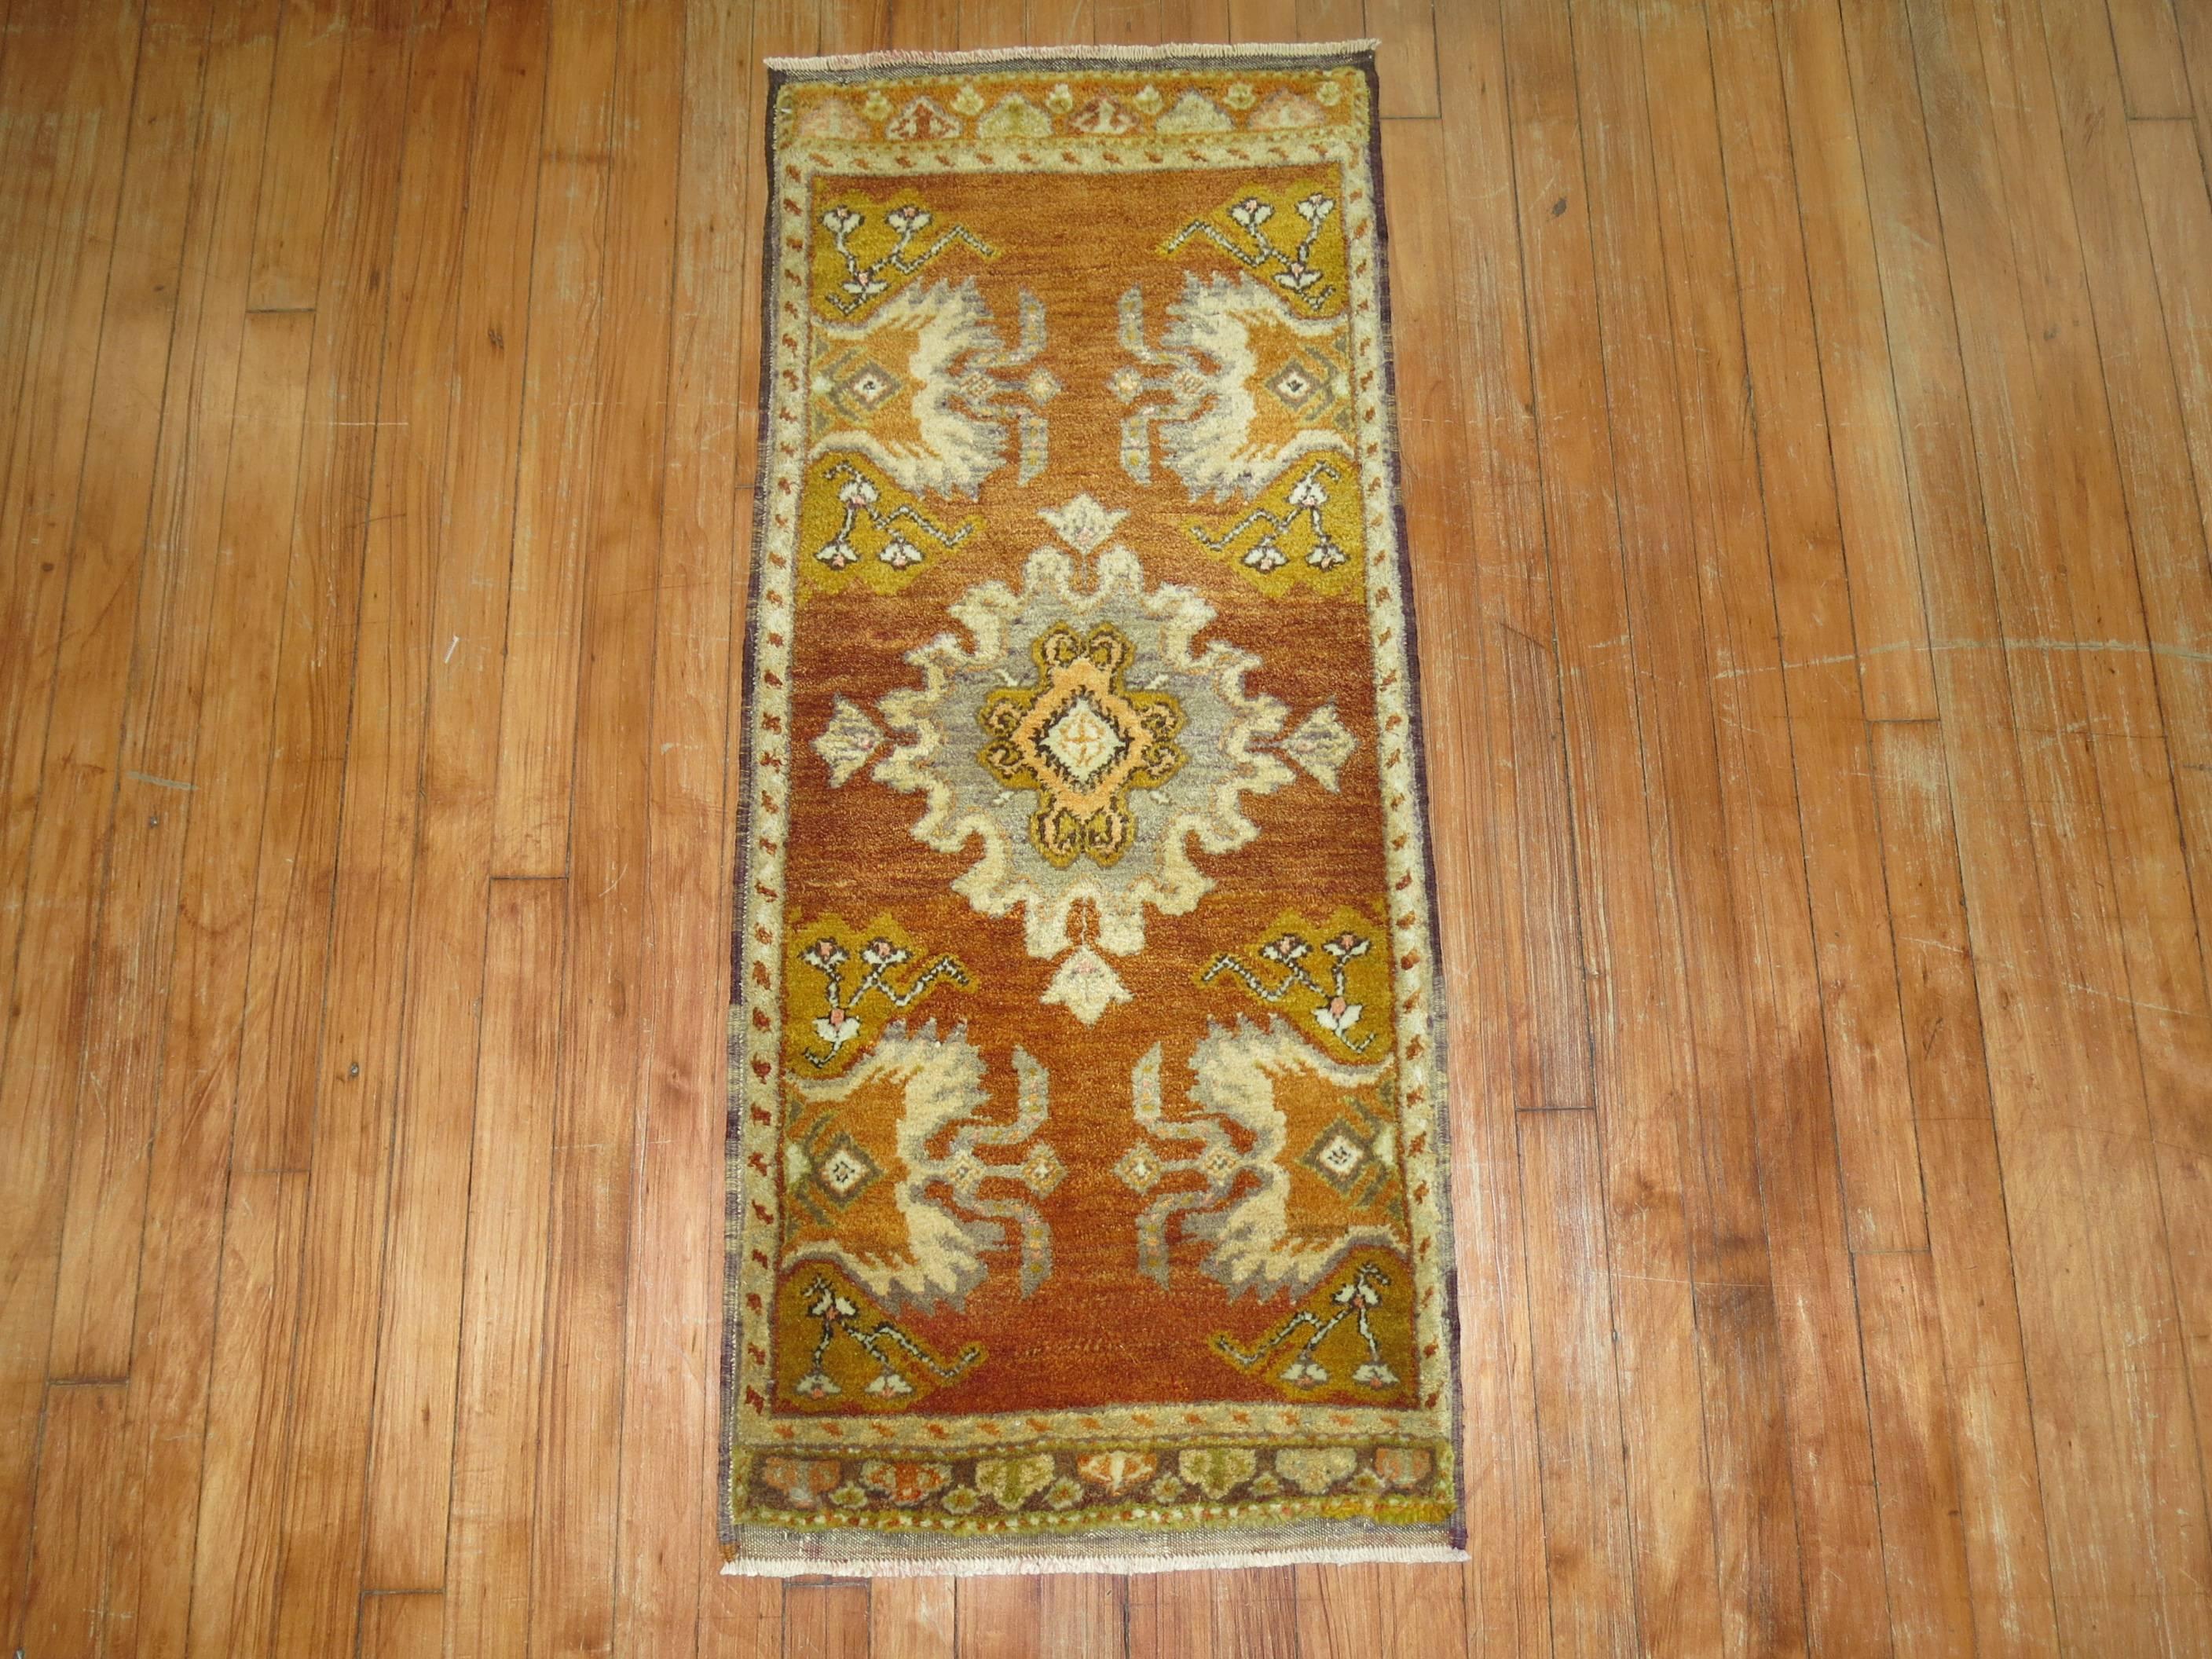 Vintage Turkish Oushak rug in unique colors.